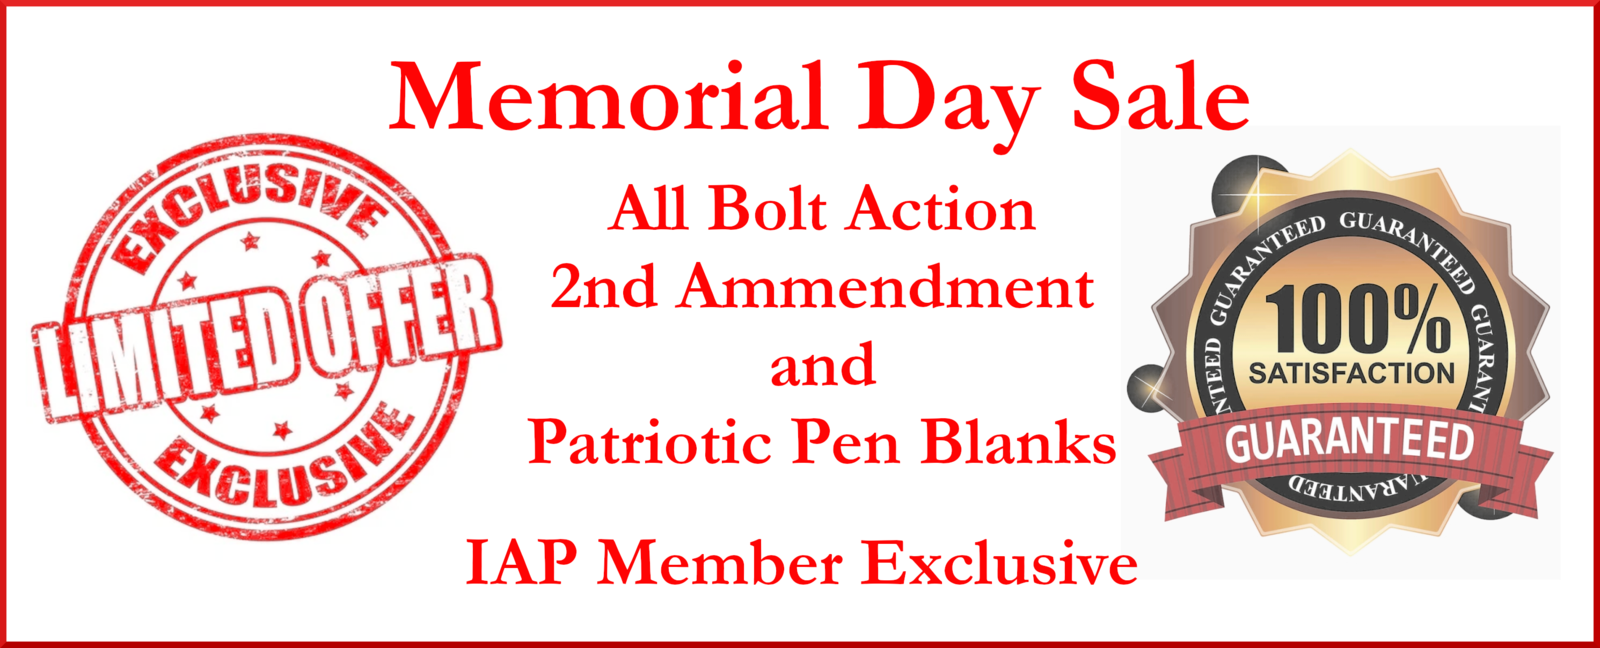 2nd Ammendment Patriotic Pen Blank Memorial Day Sale Banner.png